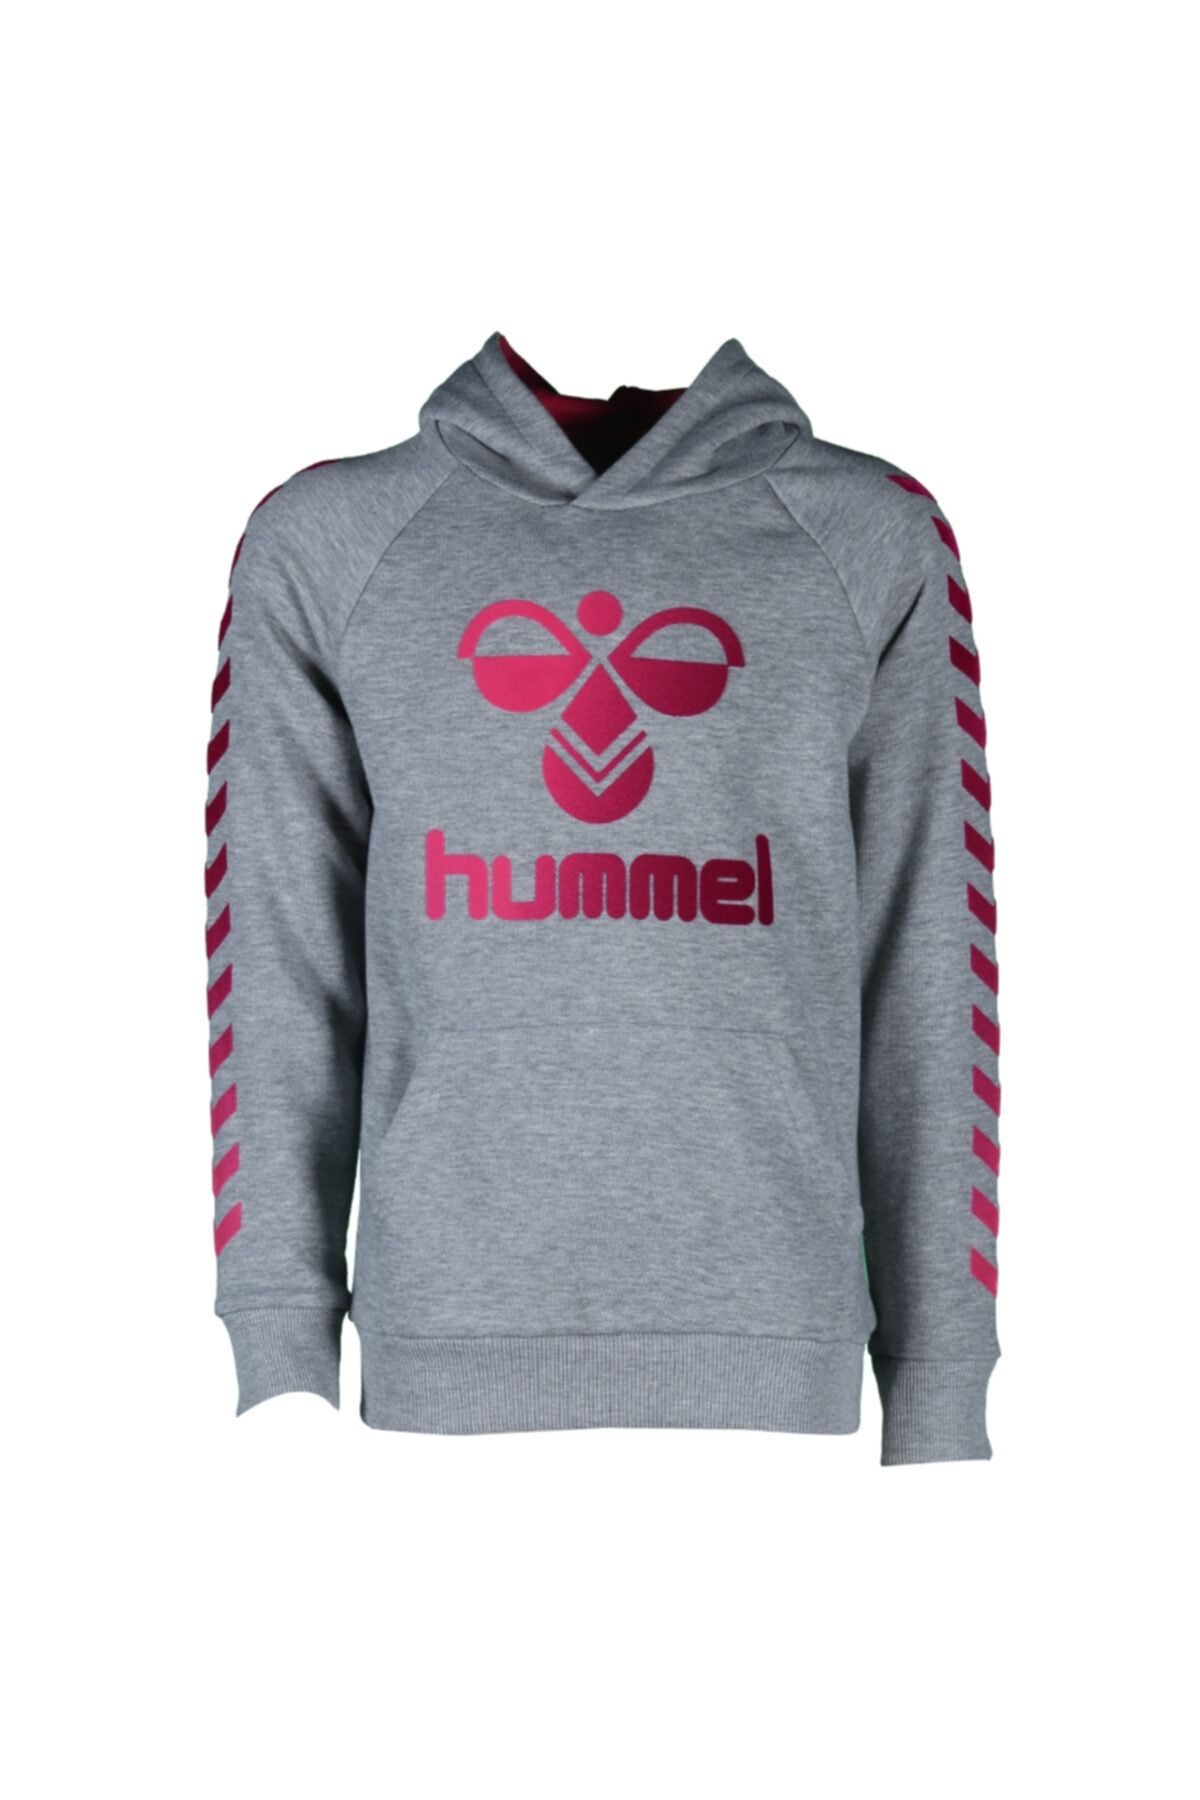 hummel Hummel Colourful Sweatshırt